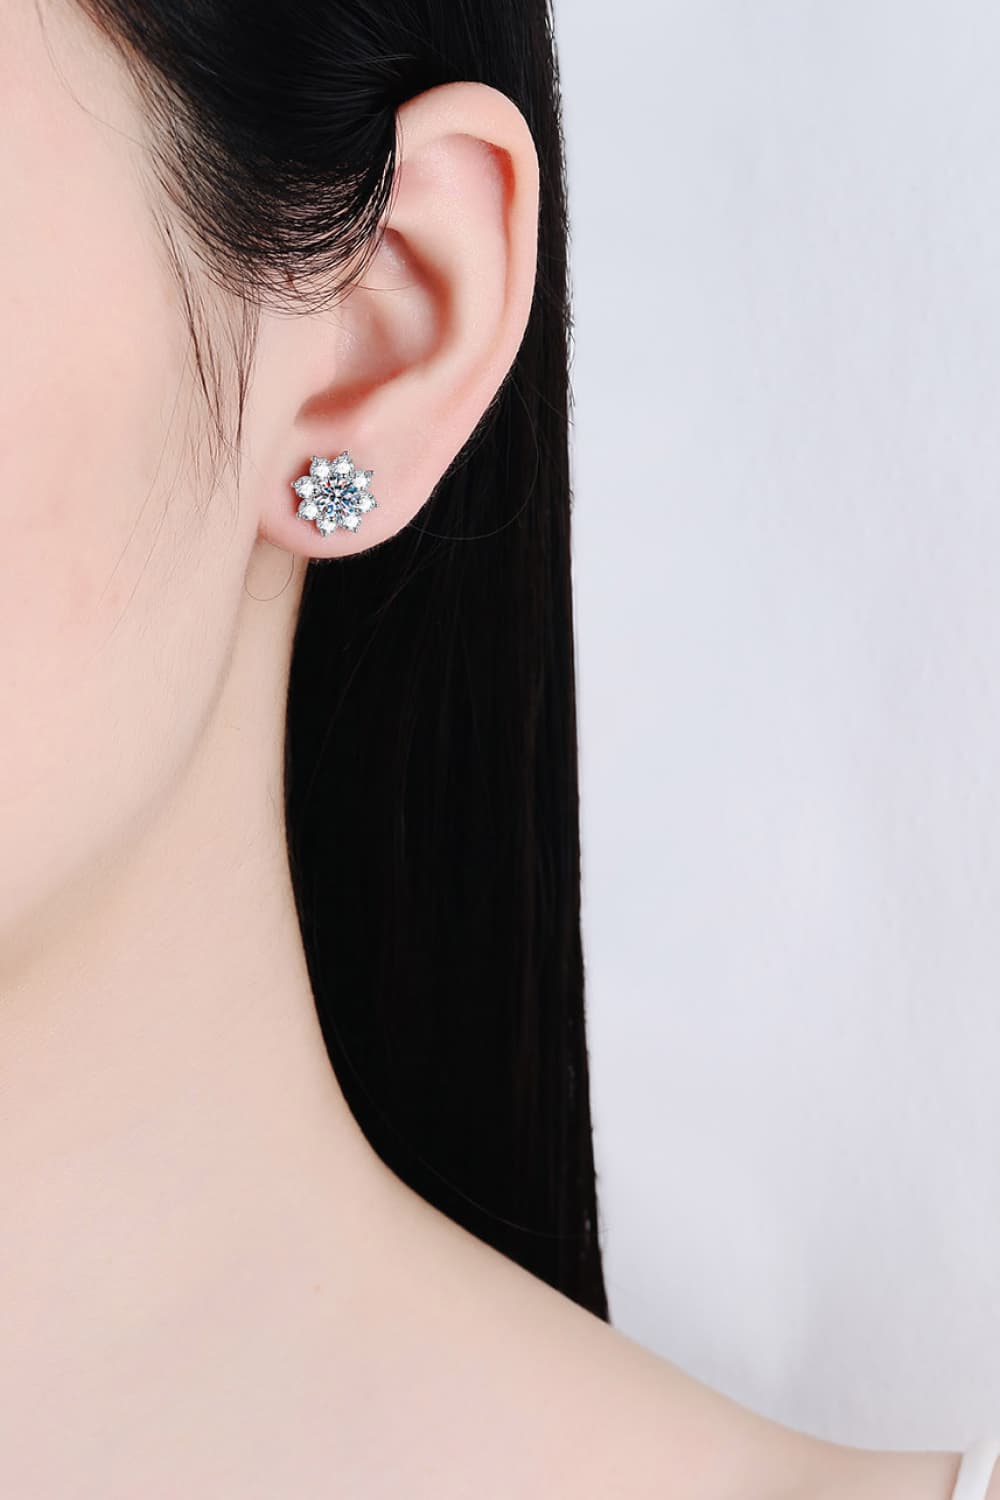 1 Carat Moissanite 925 Sterling Silver Flower Earrings BLUE ZONE PLANET